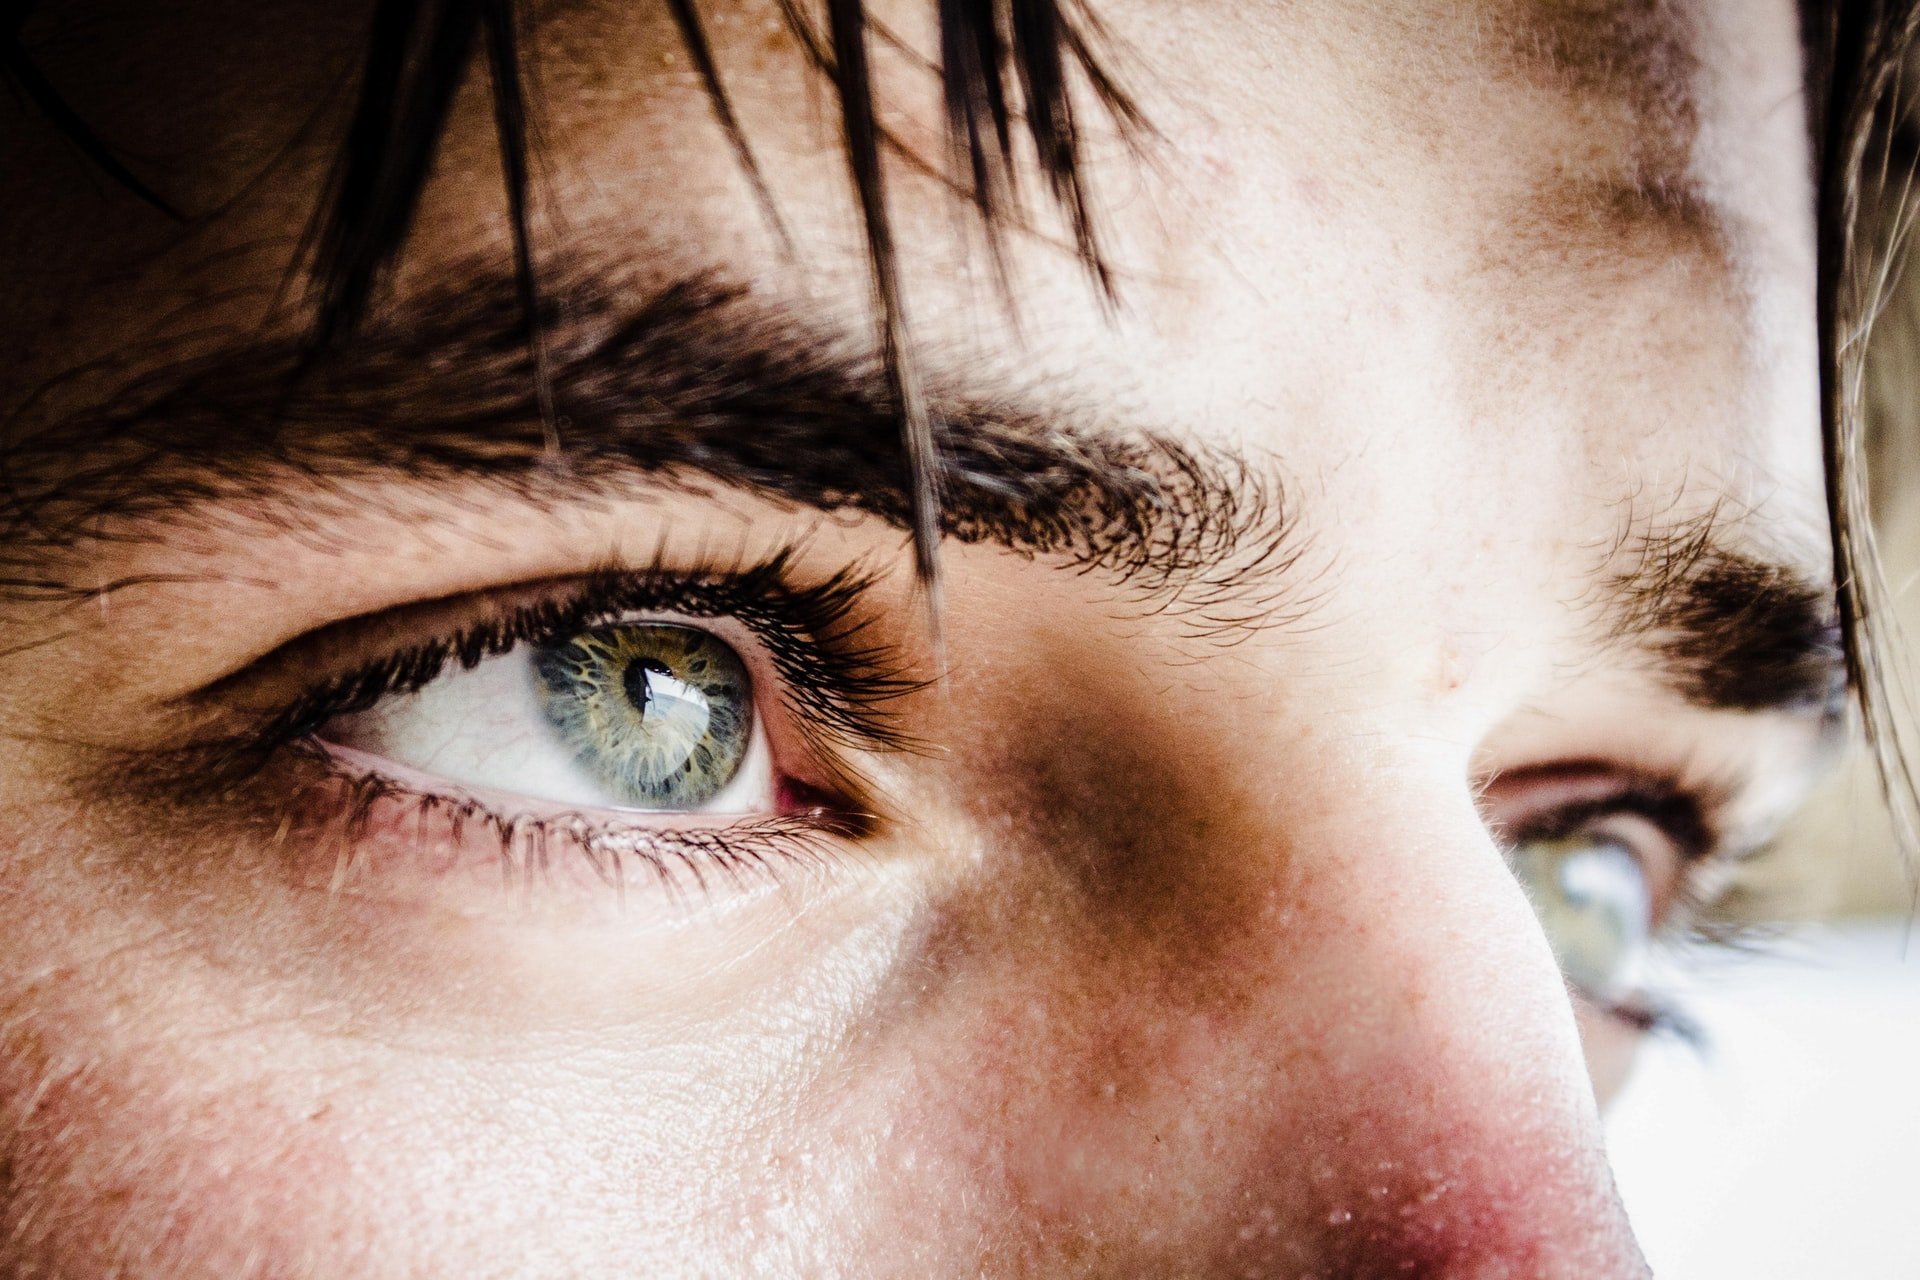 A close-up of a green-eyed man | Source: Unsplash